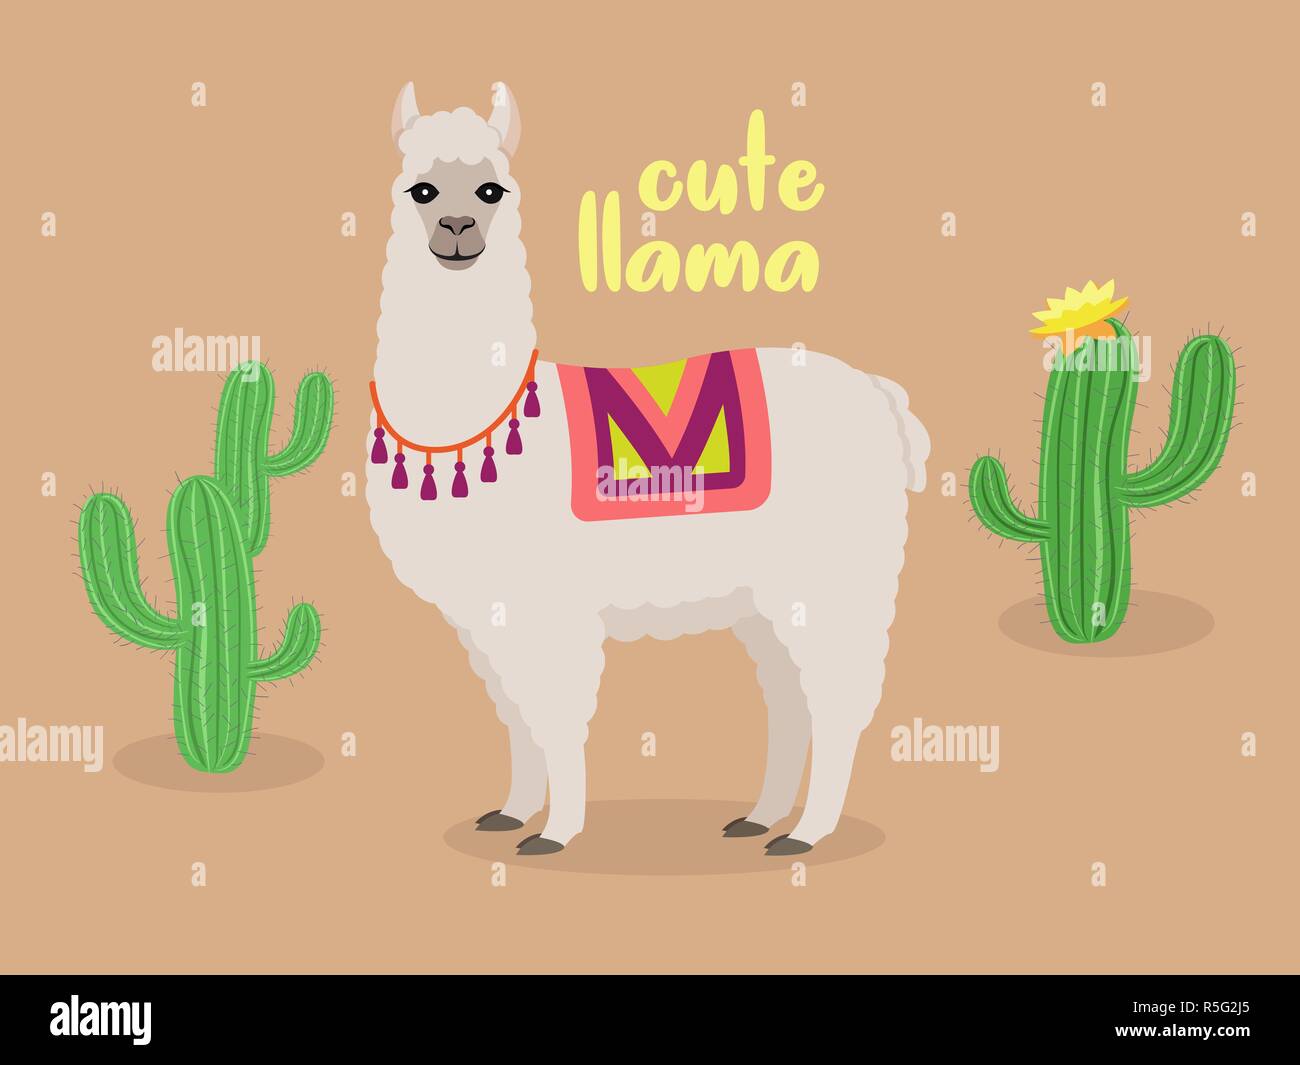 Cute llama in desert with cactus vector Stock Vector